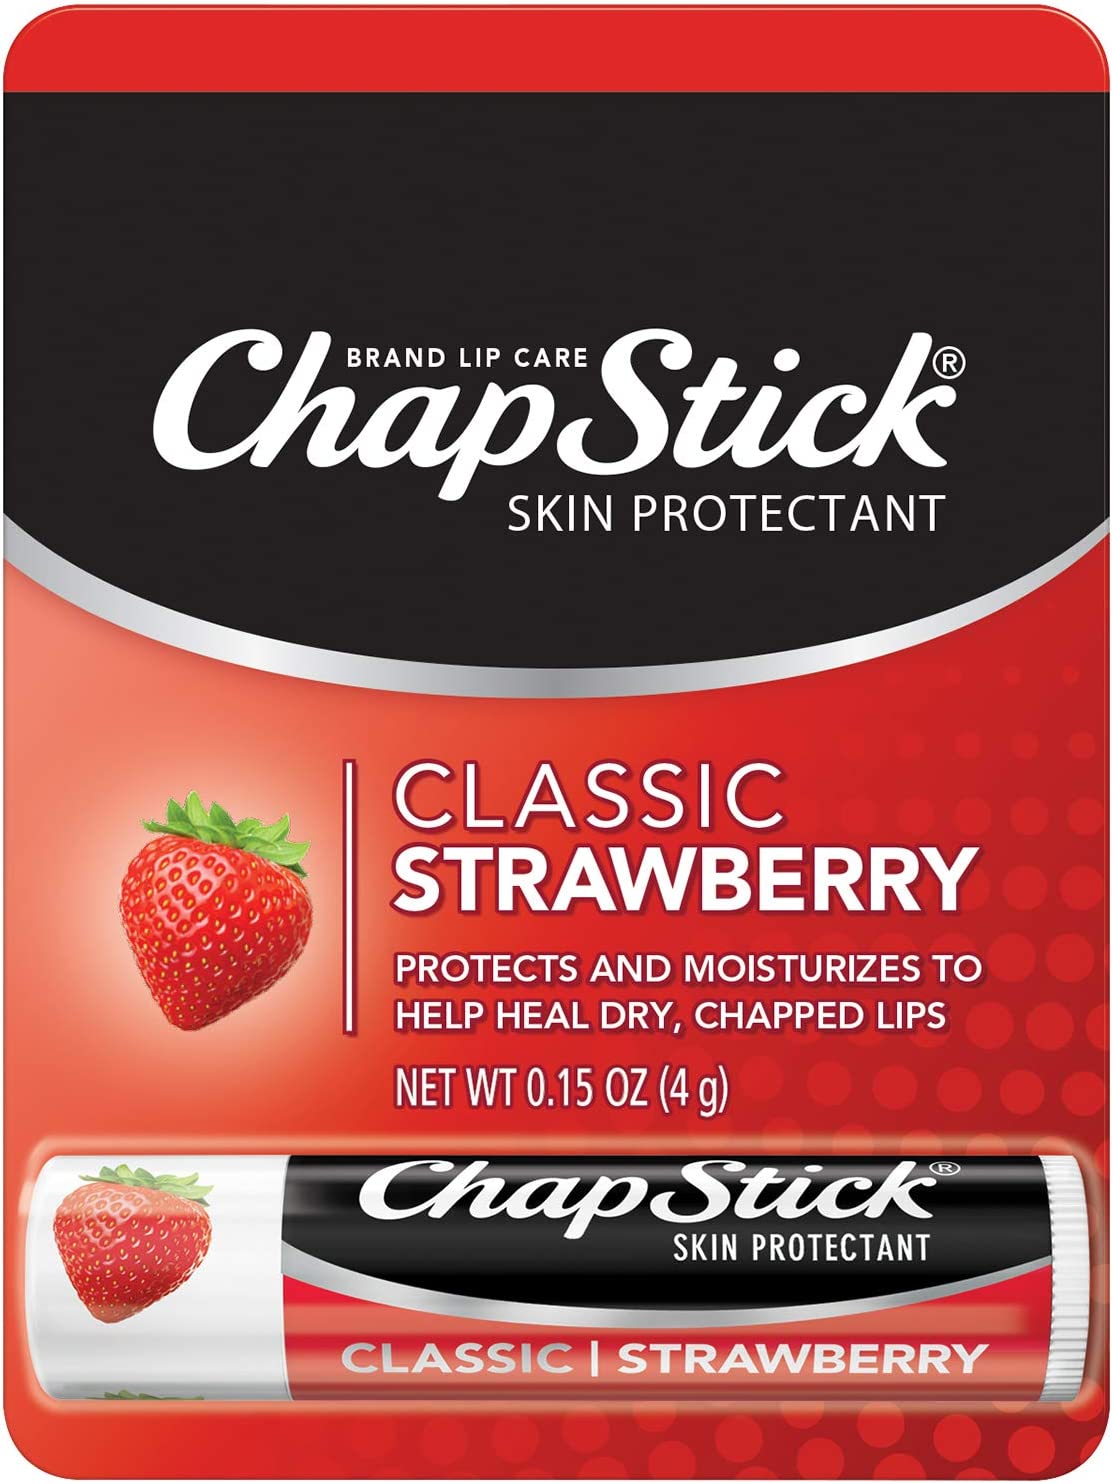 0.15-Oz ChapStick Classic Strawberry Lip Balm Tube $0.93 w/ S&S + Free Shipping w/ Prime or on $25+